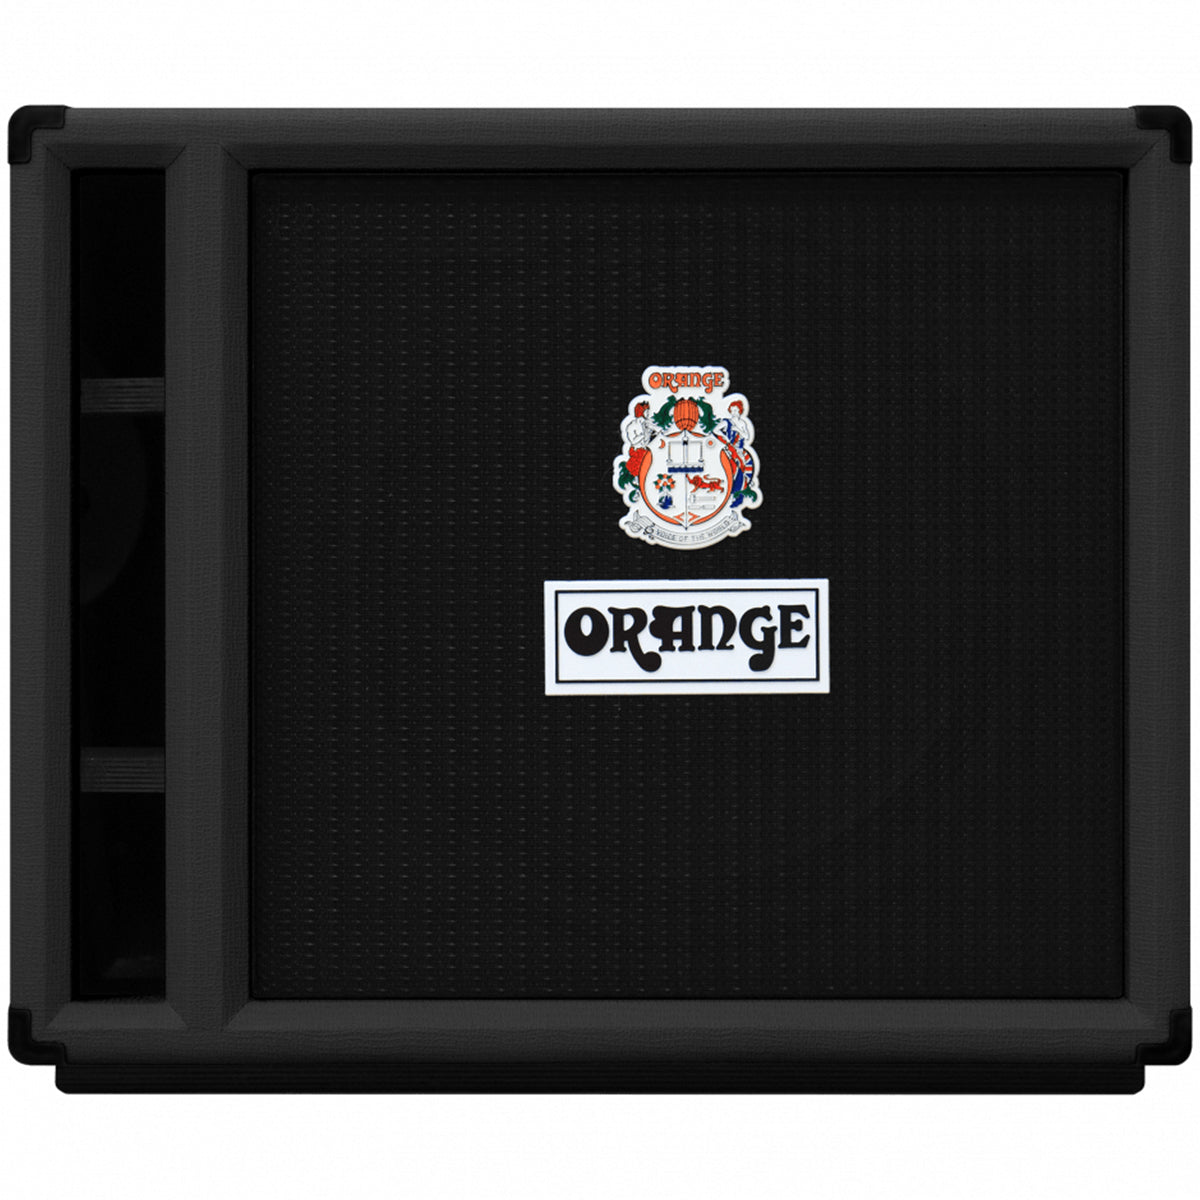 Orange OBC115 Bass Guitar Cabinet 1x15inch Speaker Cab - Black